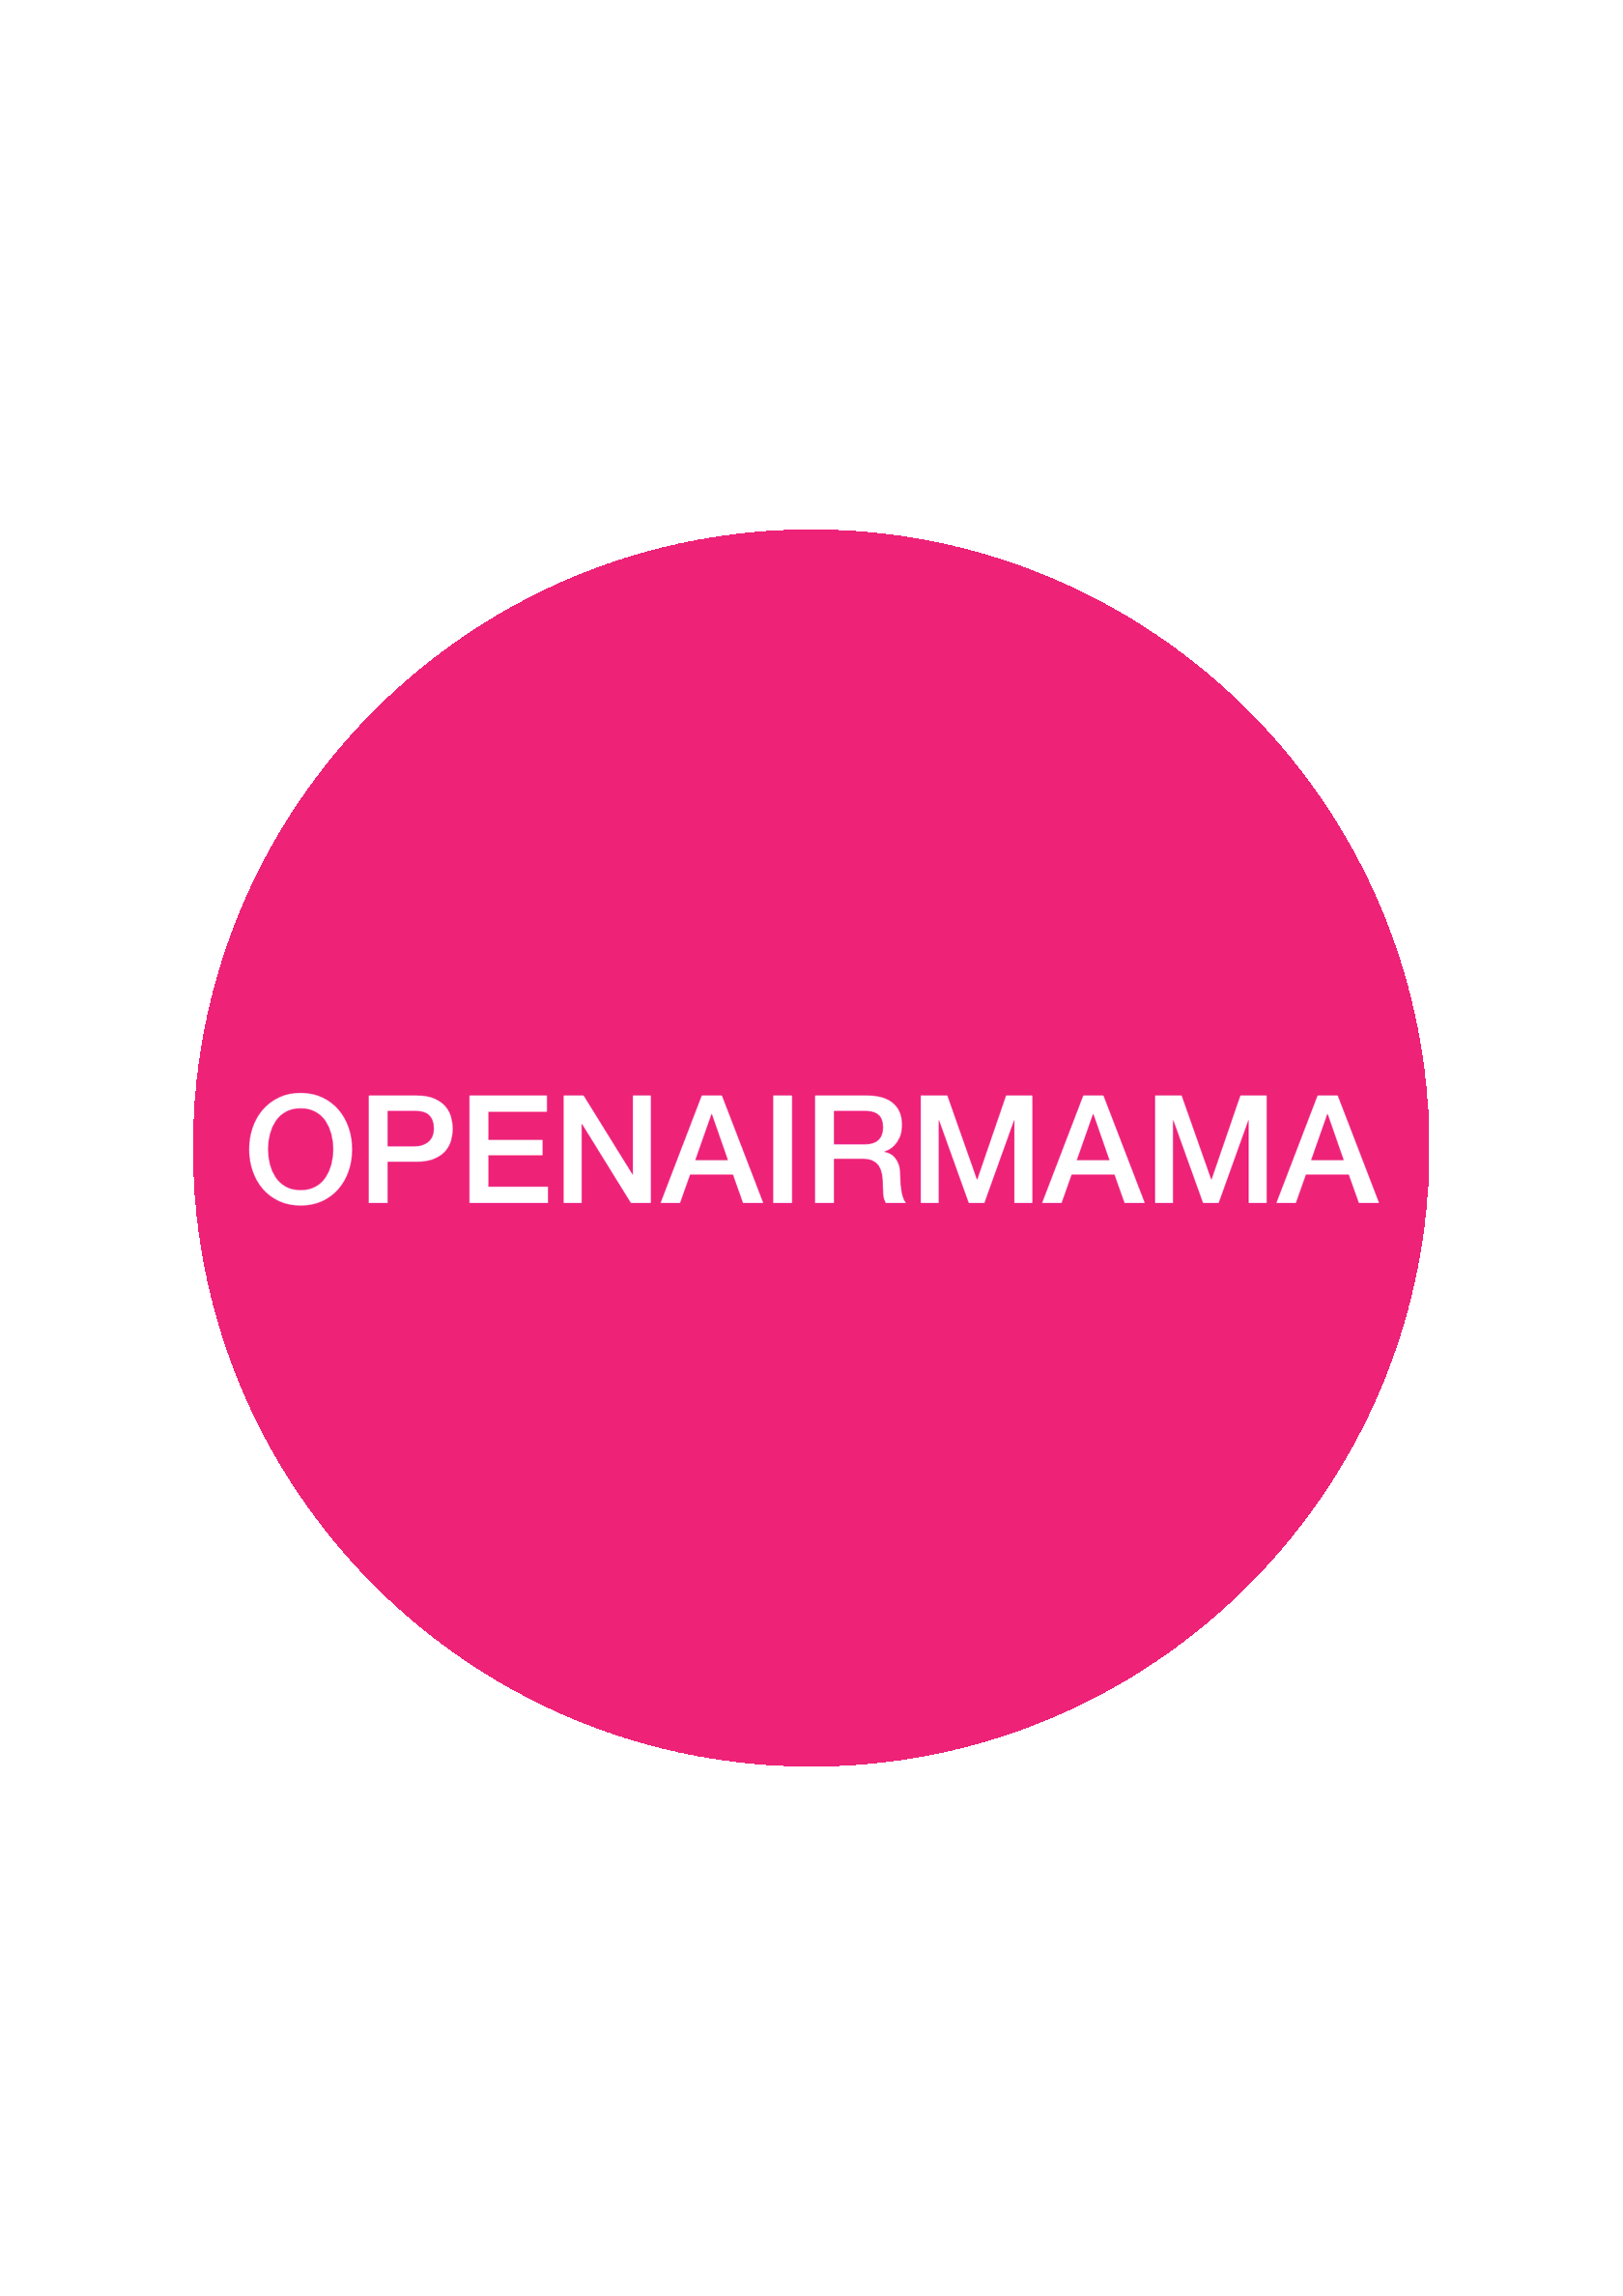  Openairmama 